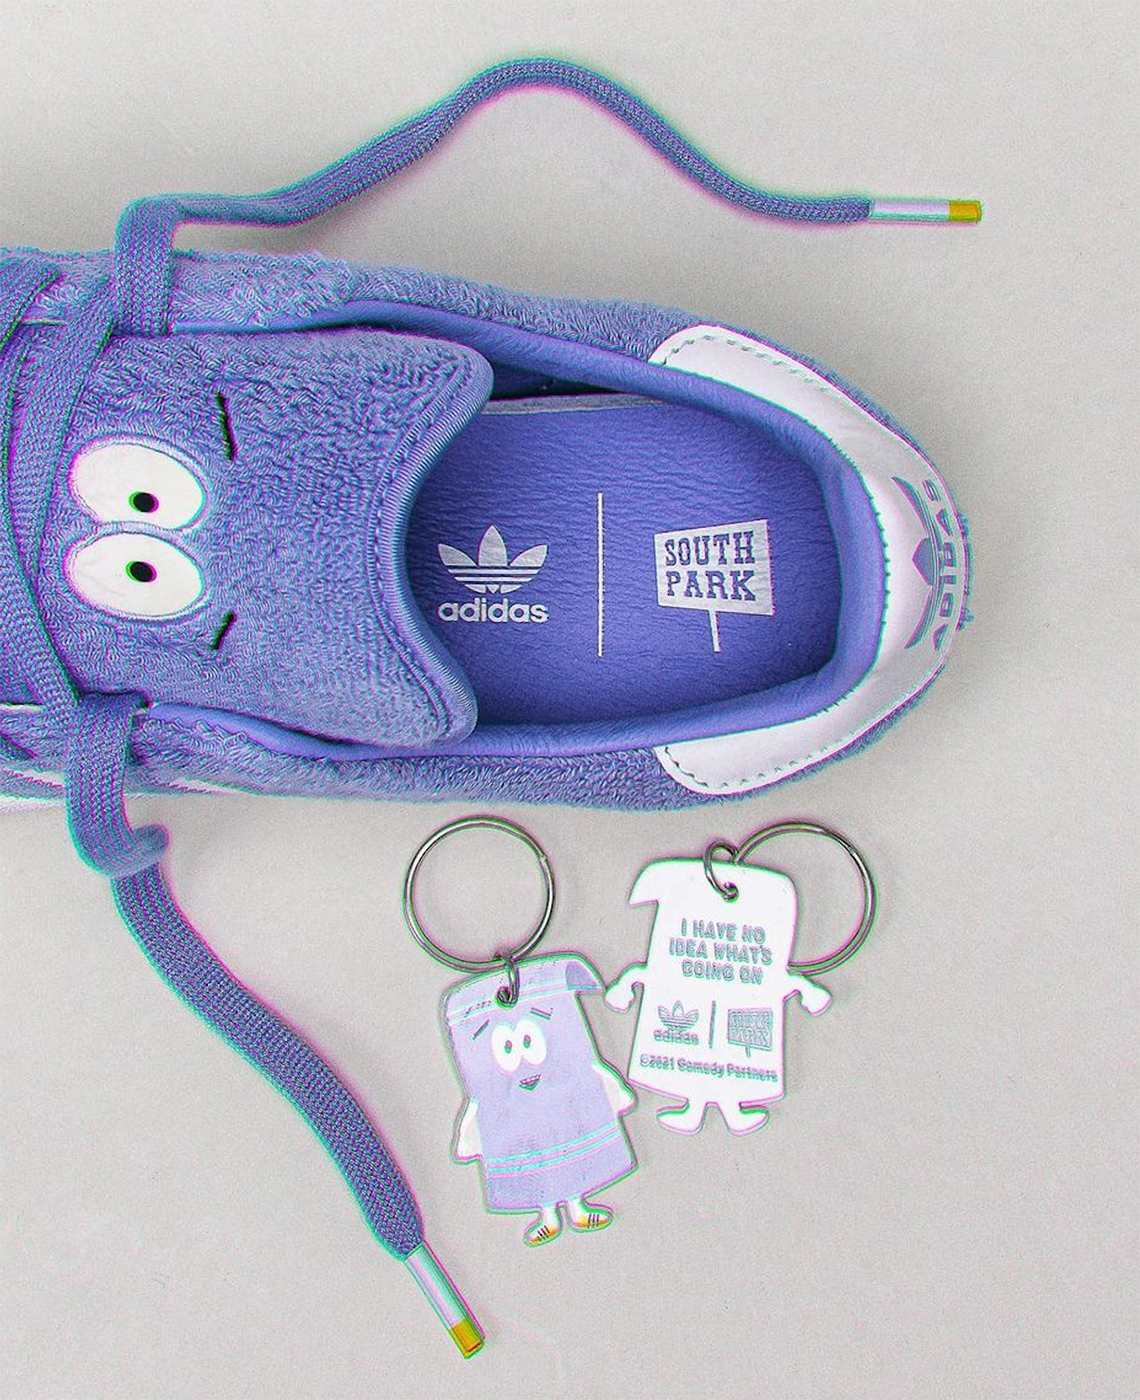 Towelie adidas South Park Shoes – Release Date | SneakerNews.com